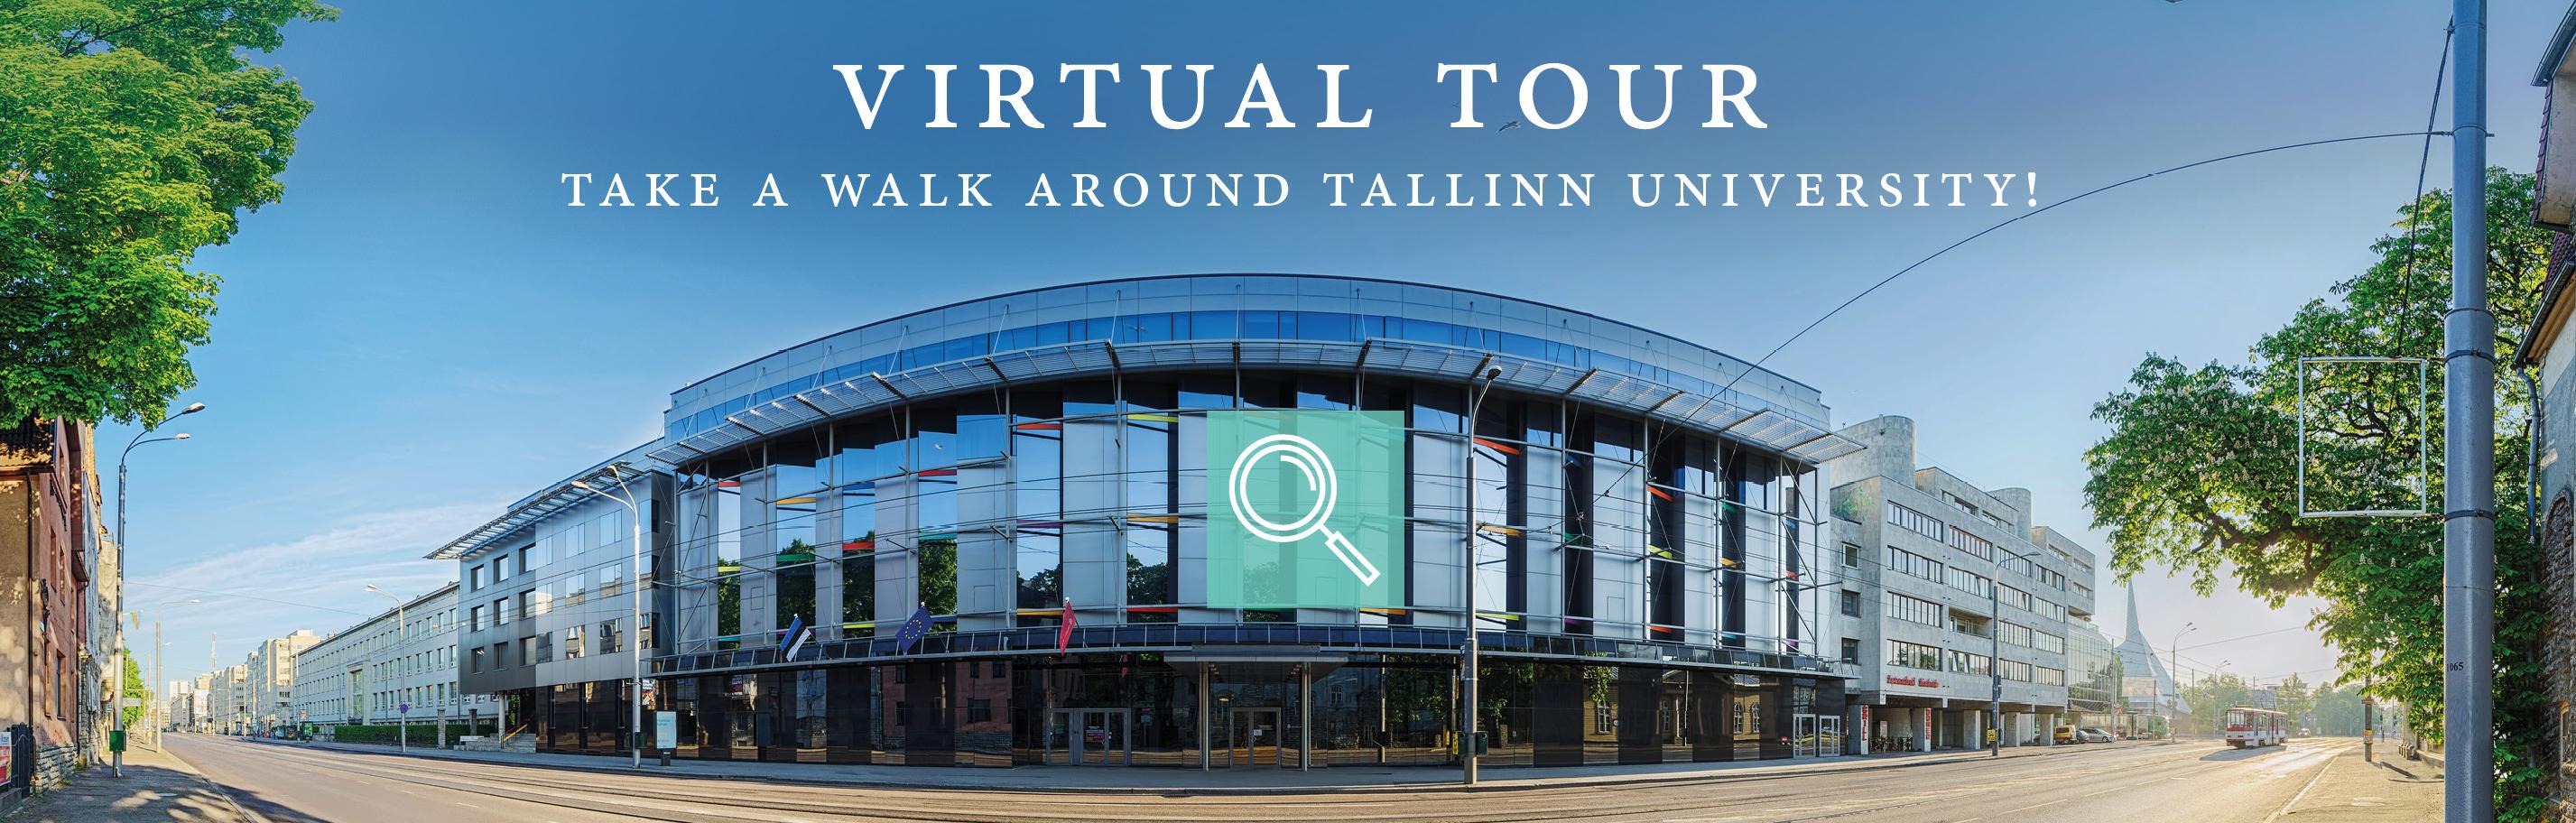 astra study building virtual tour